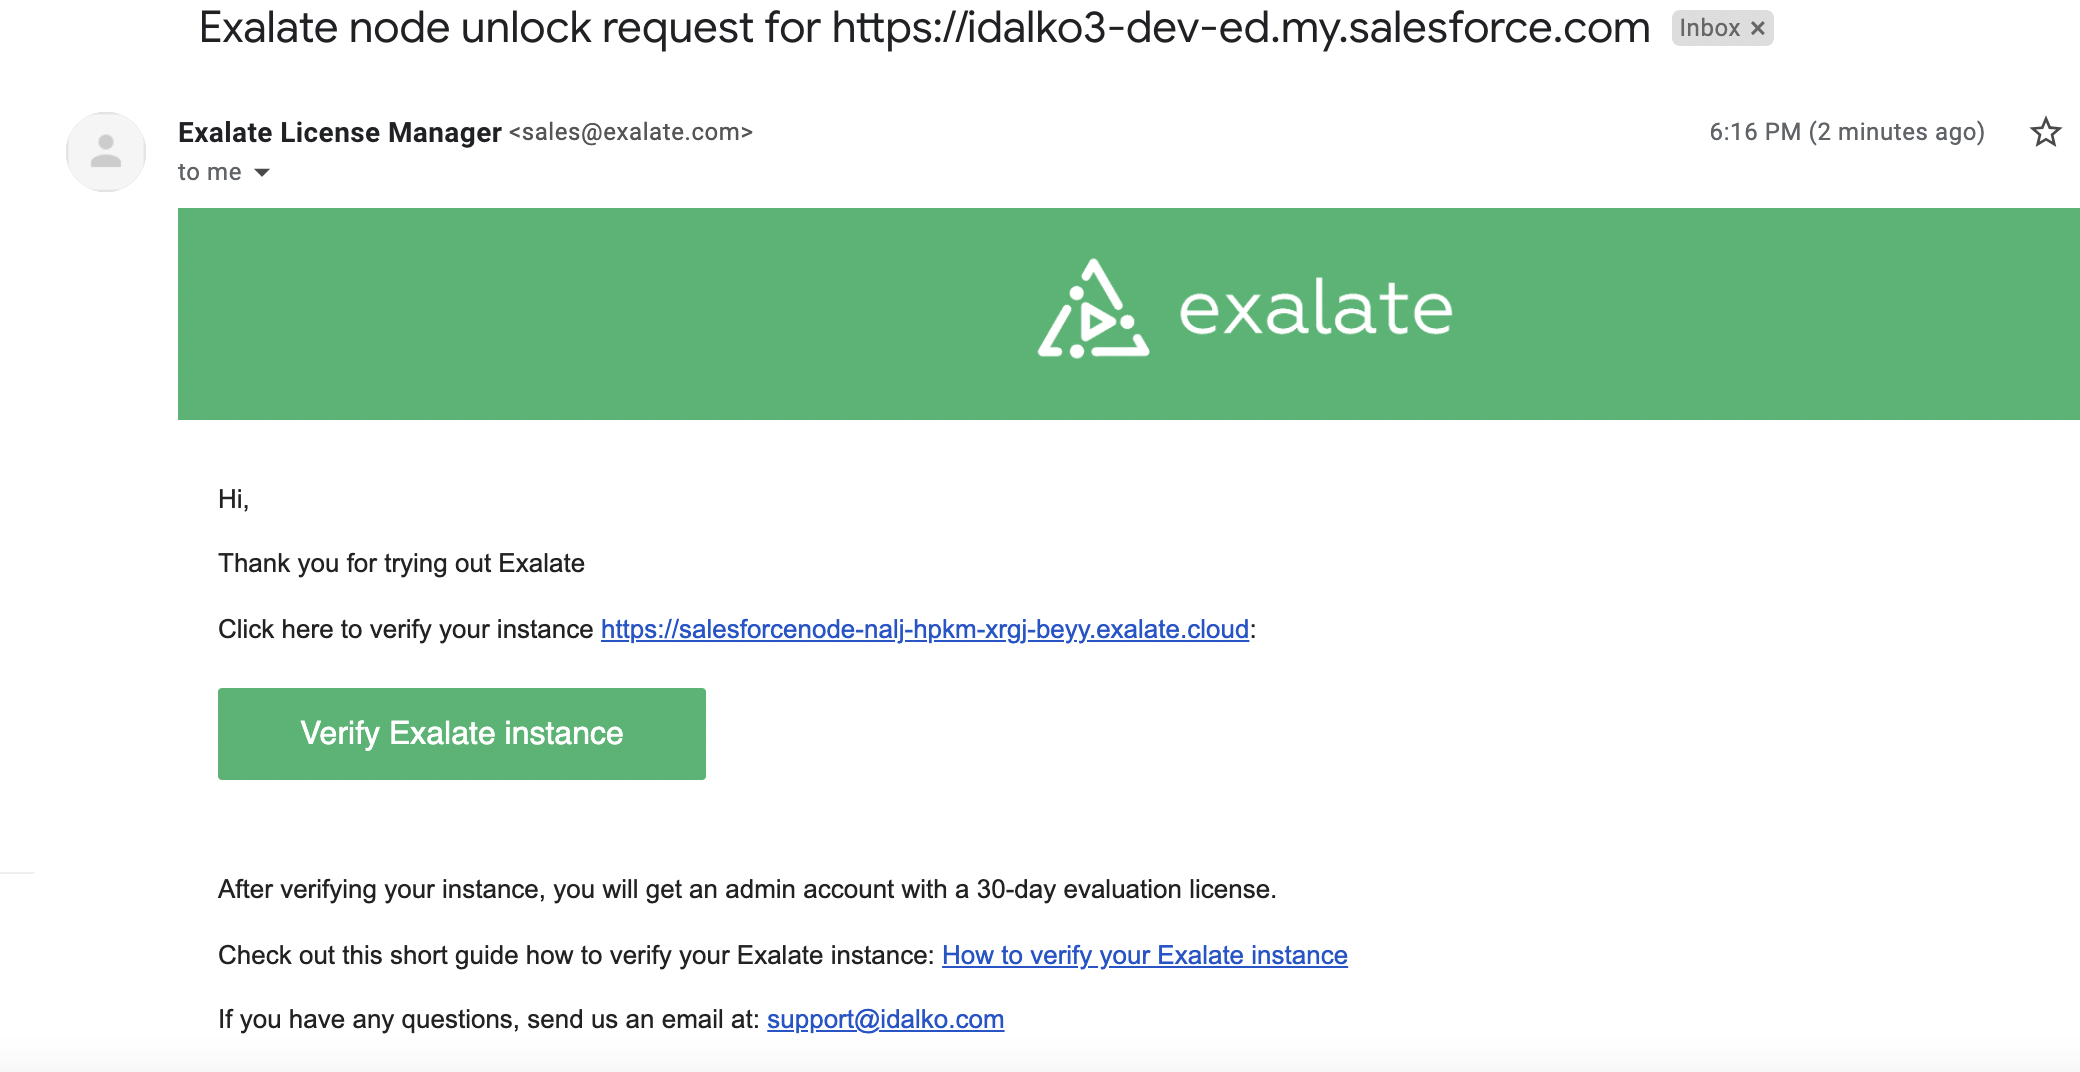 Verify Exalate instance on Salesforce